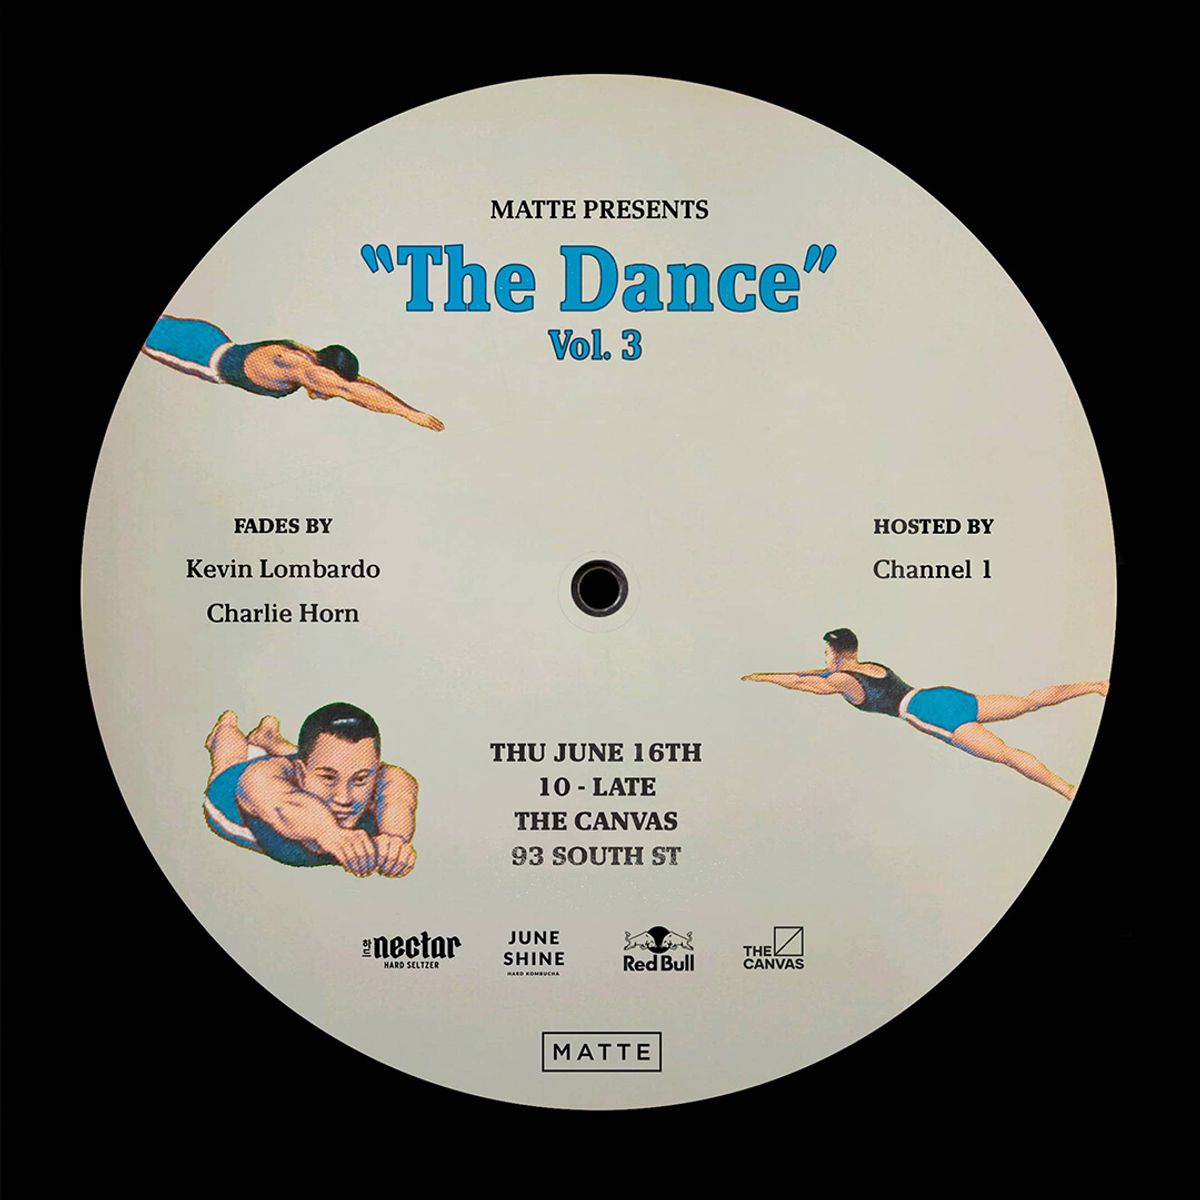 The Dance Vol. 3